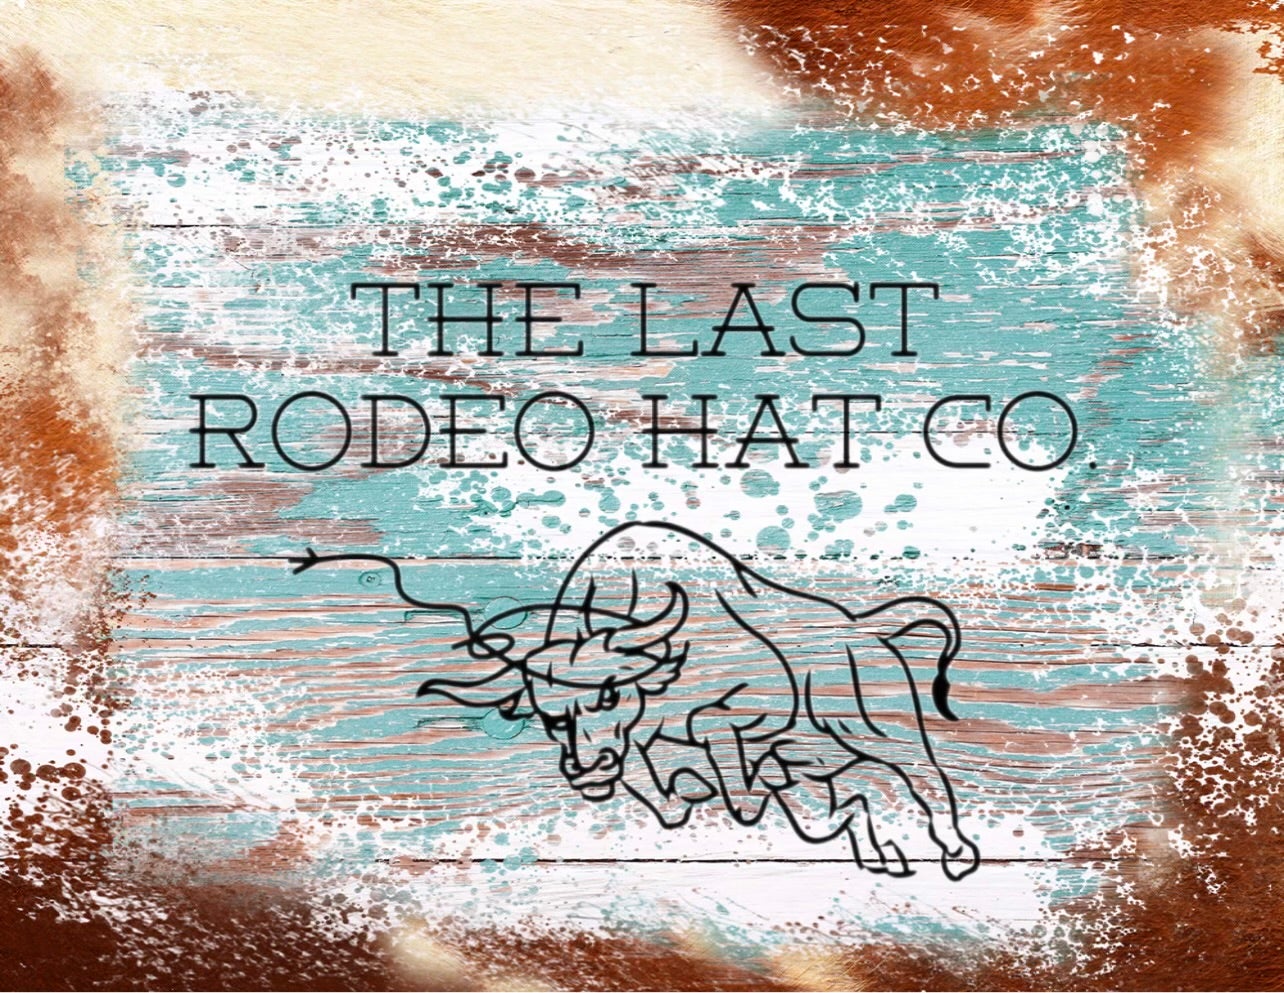 Home  The Last Rodeo HatCo.